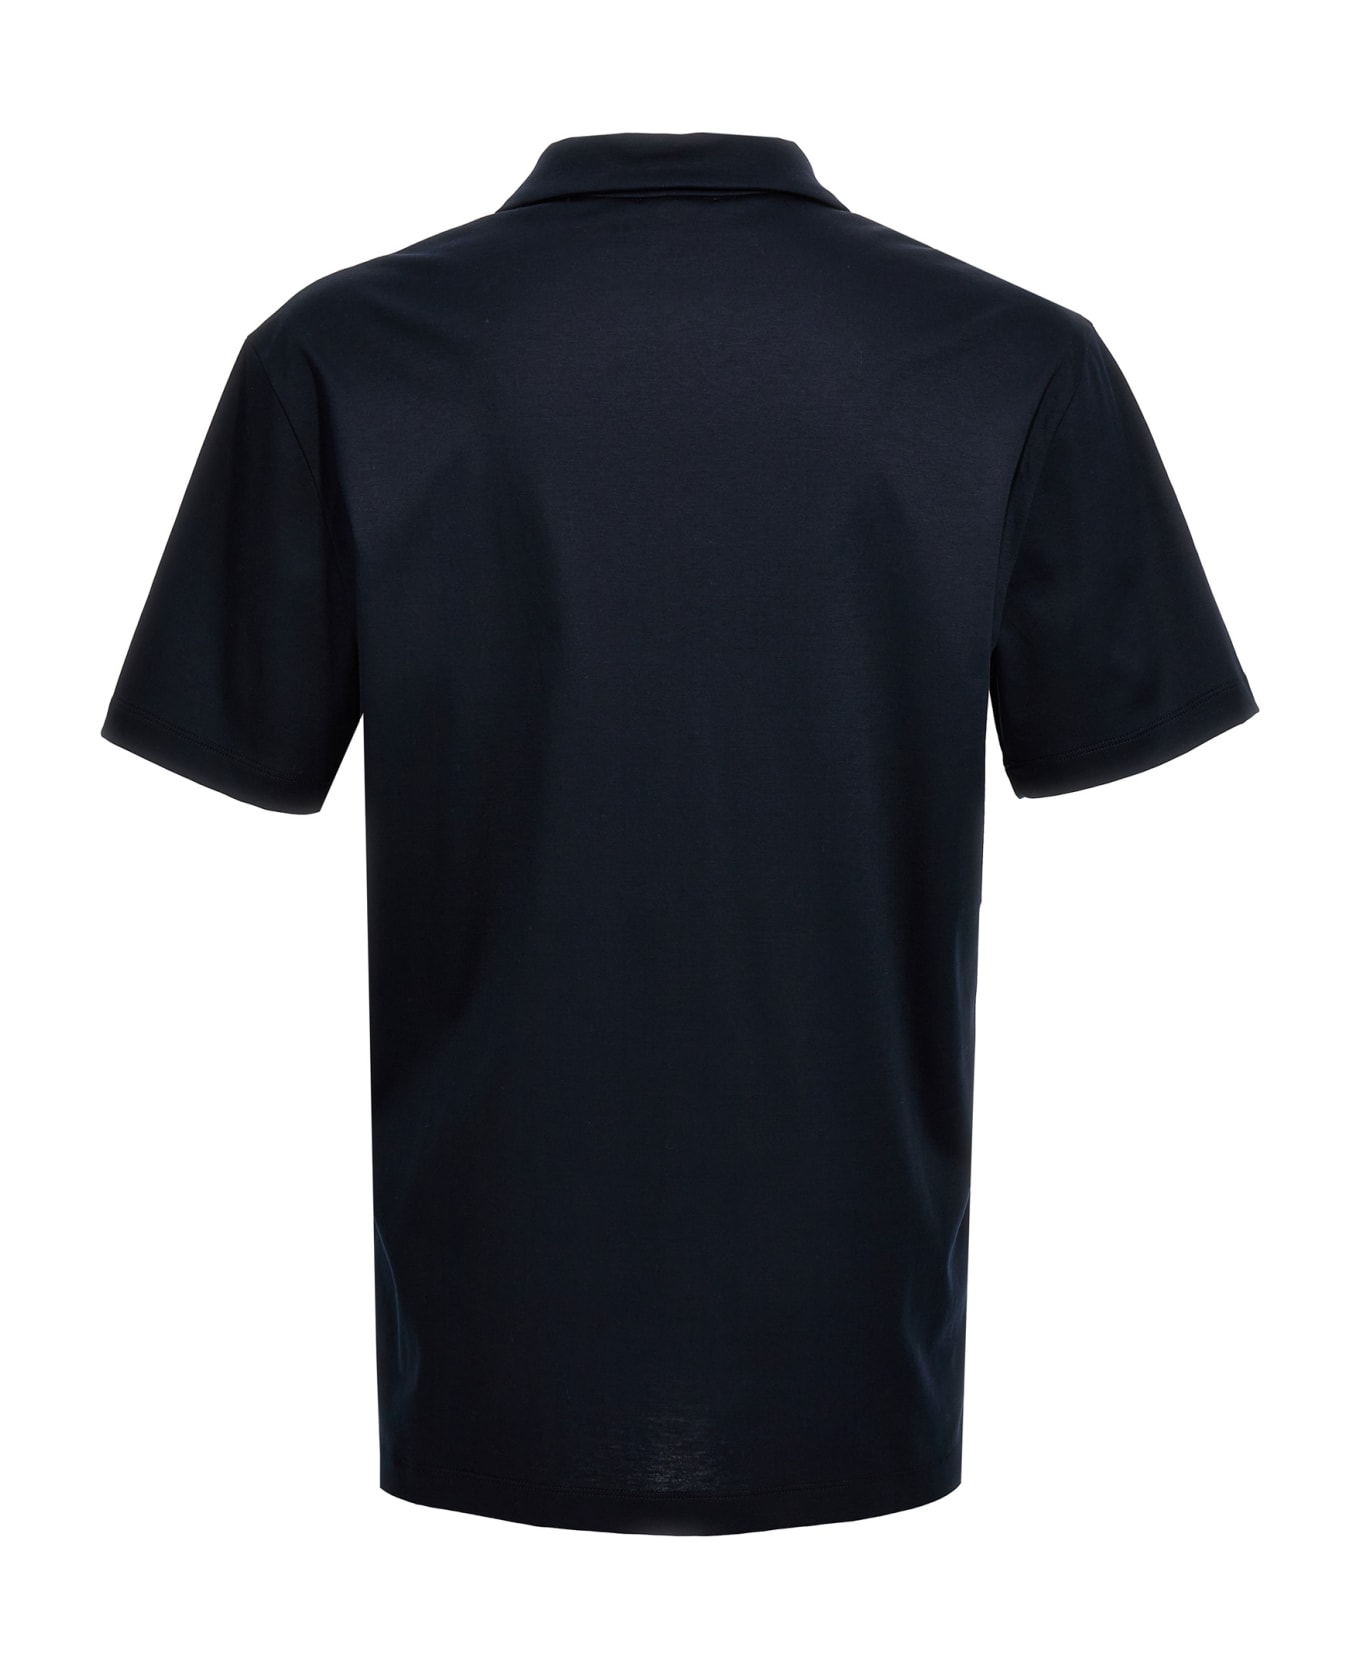 Giorgio Armani Logo Embroidery Polo Shirt - Blue